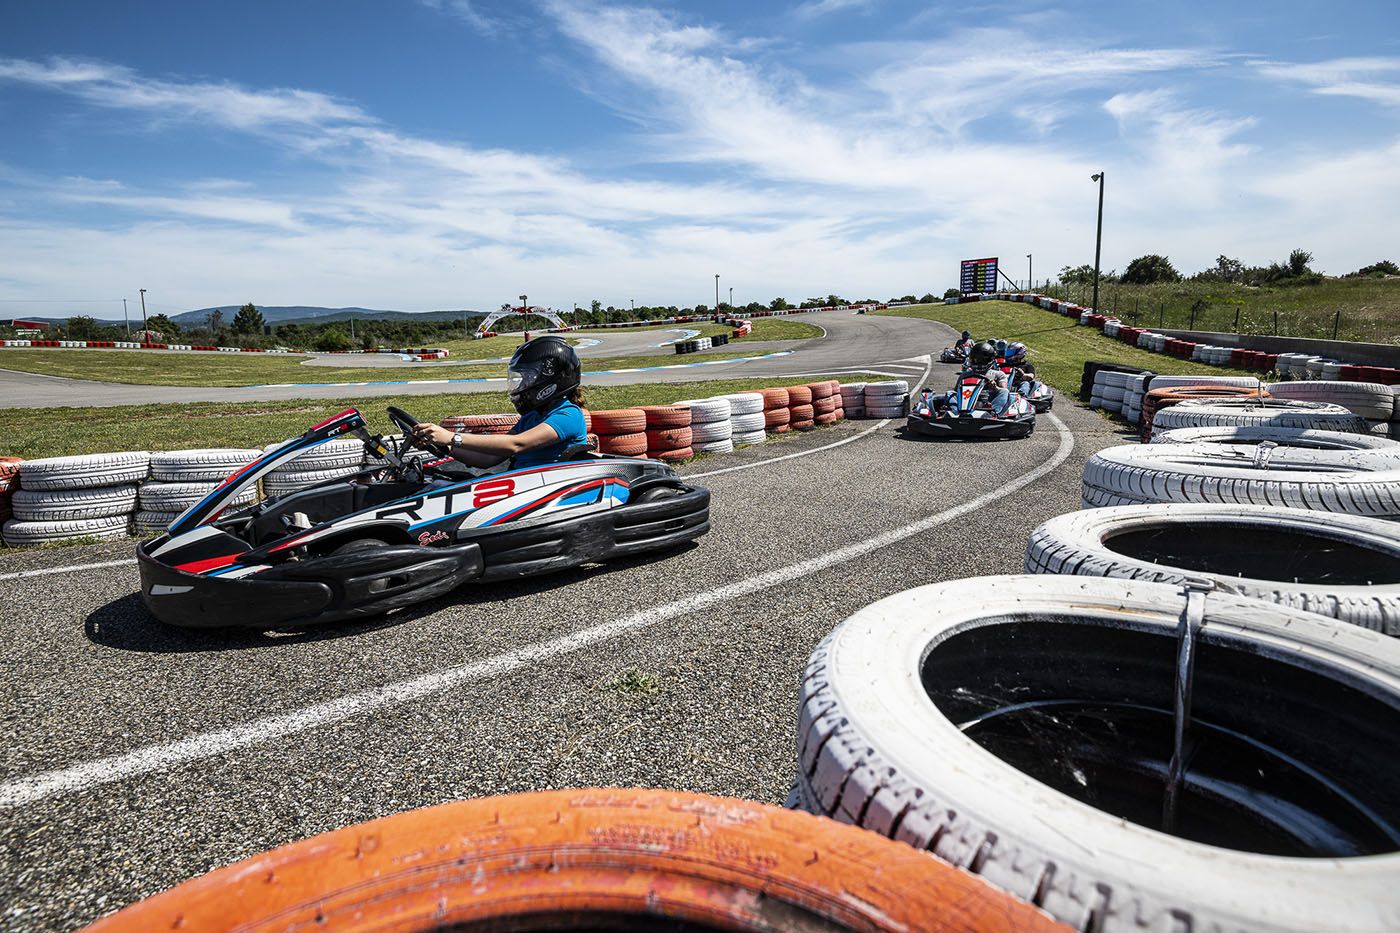 Karting Aubenas - Le circuit